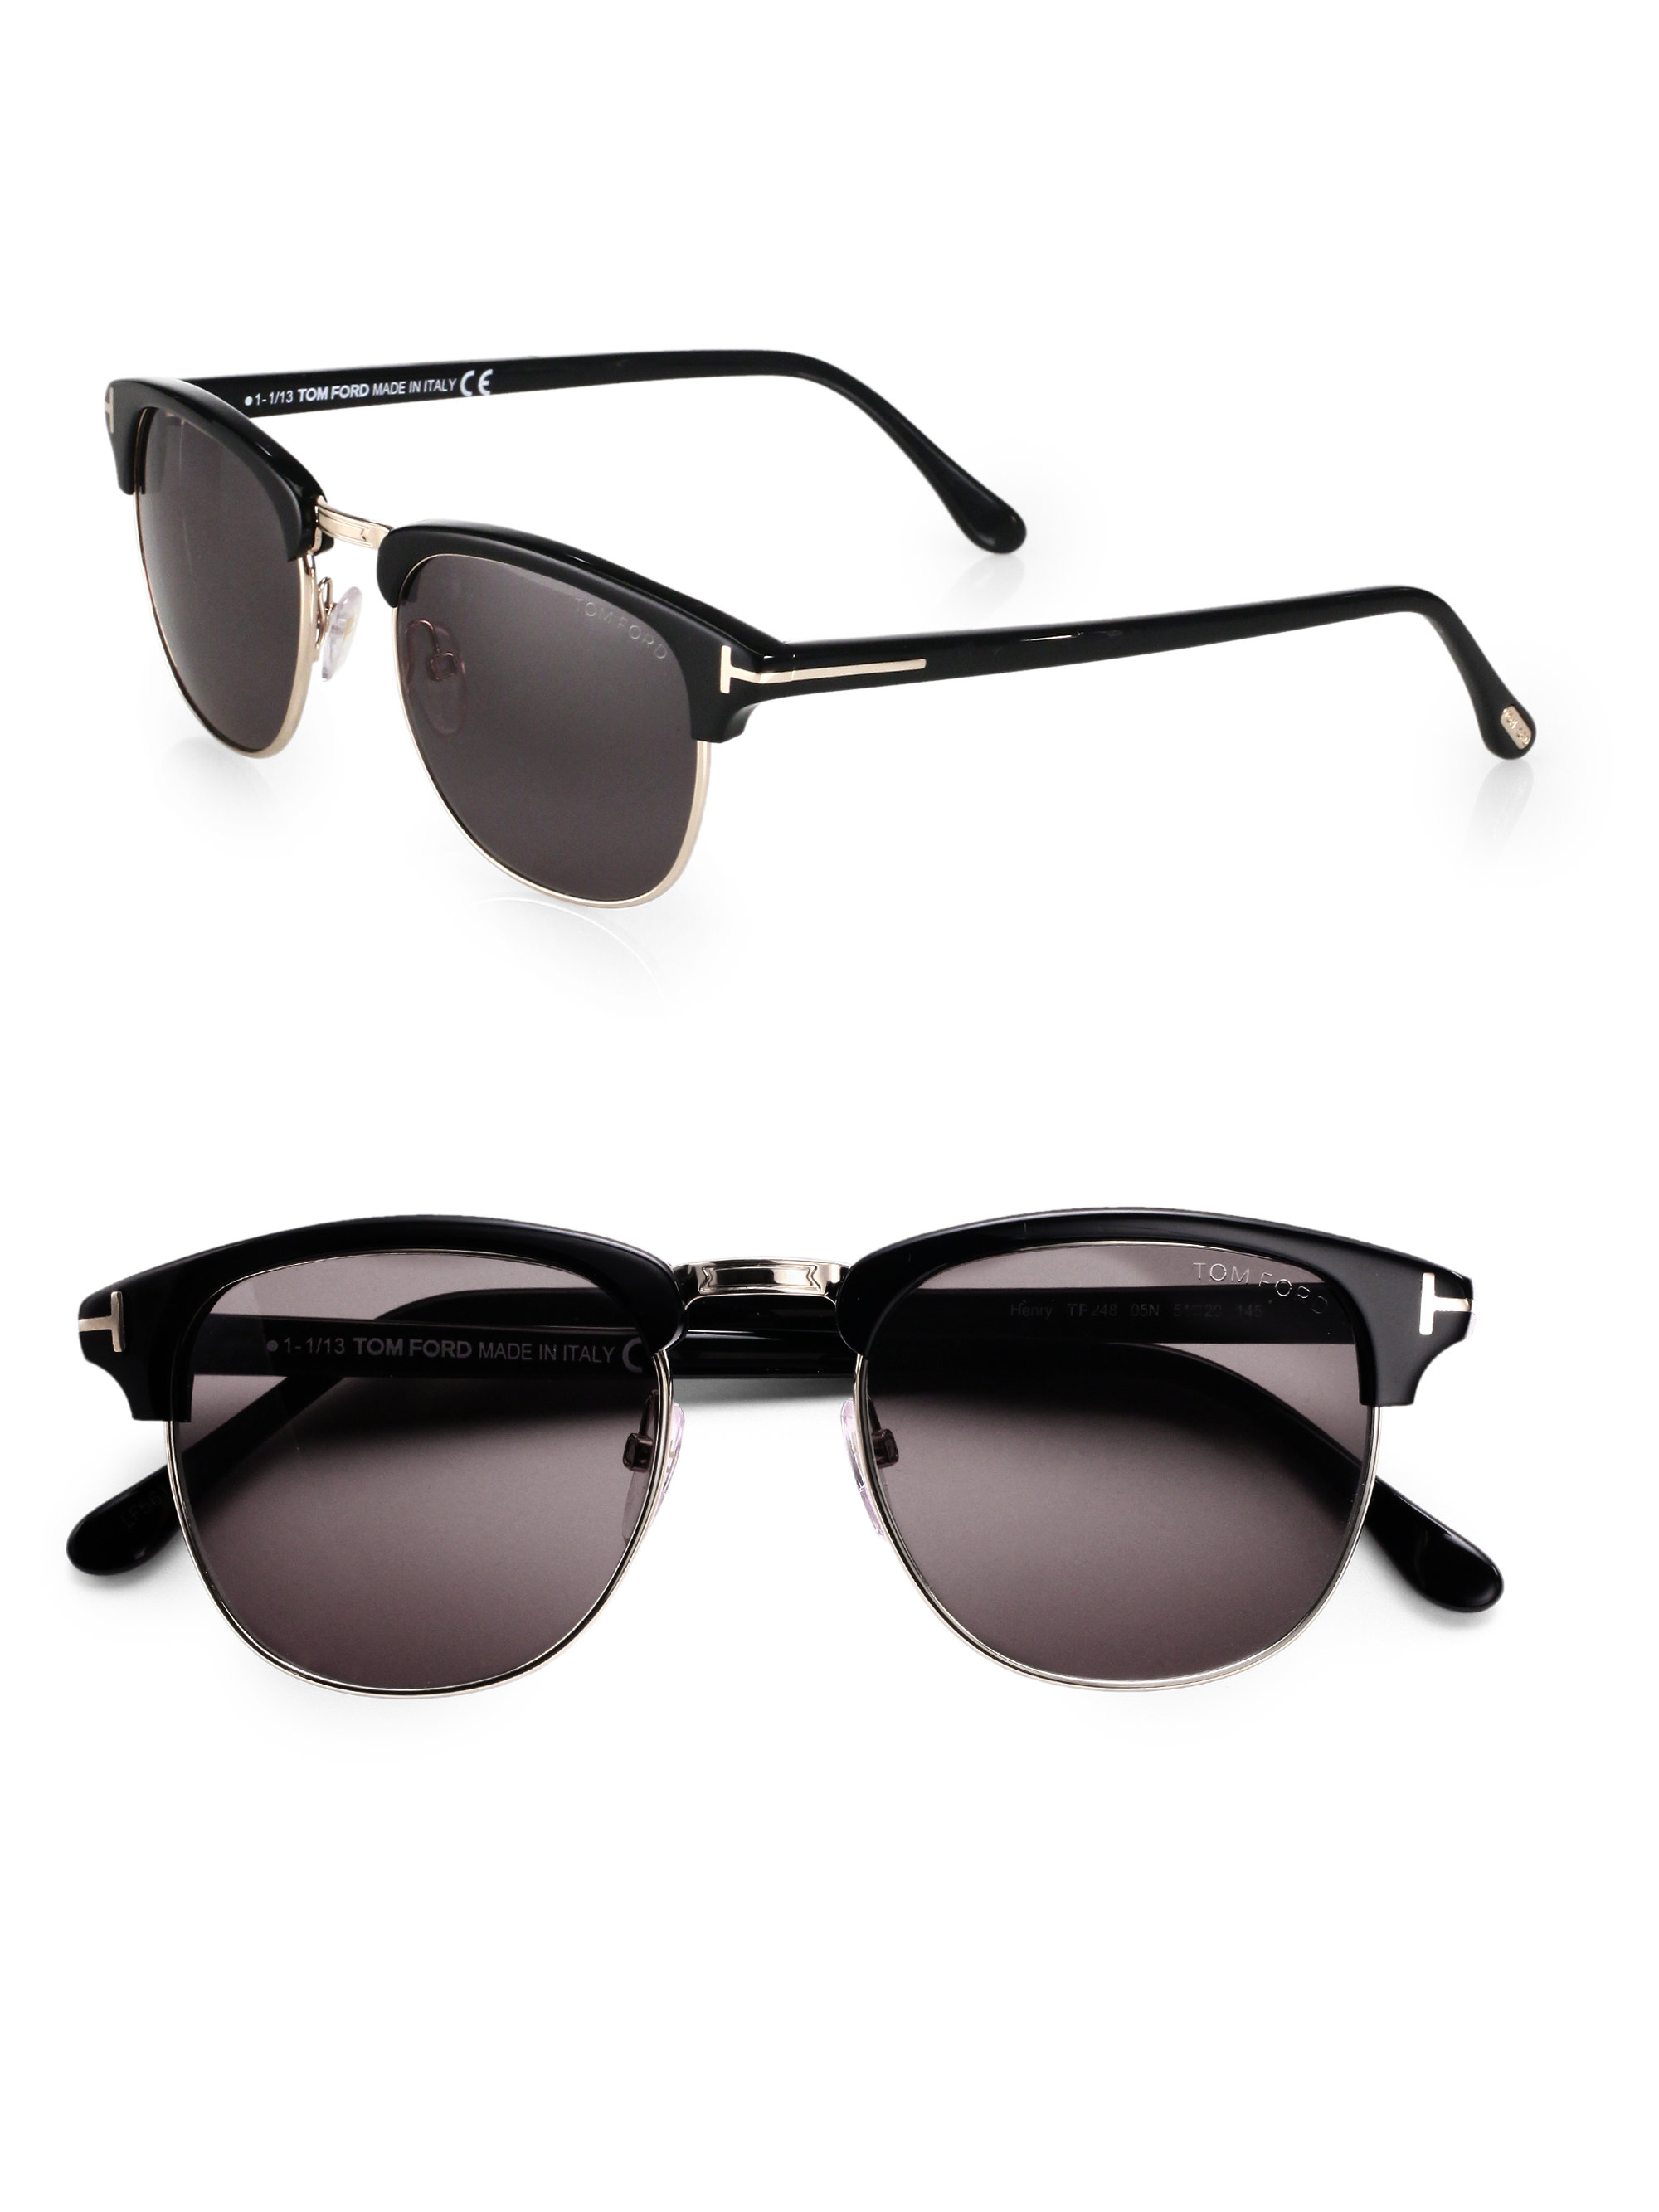 Tom ford black wayfarer-style sunglasses #6